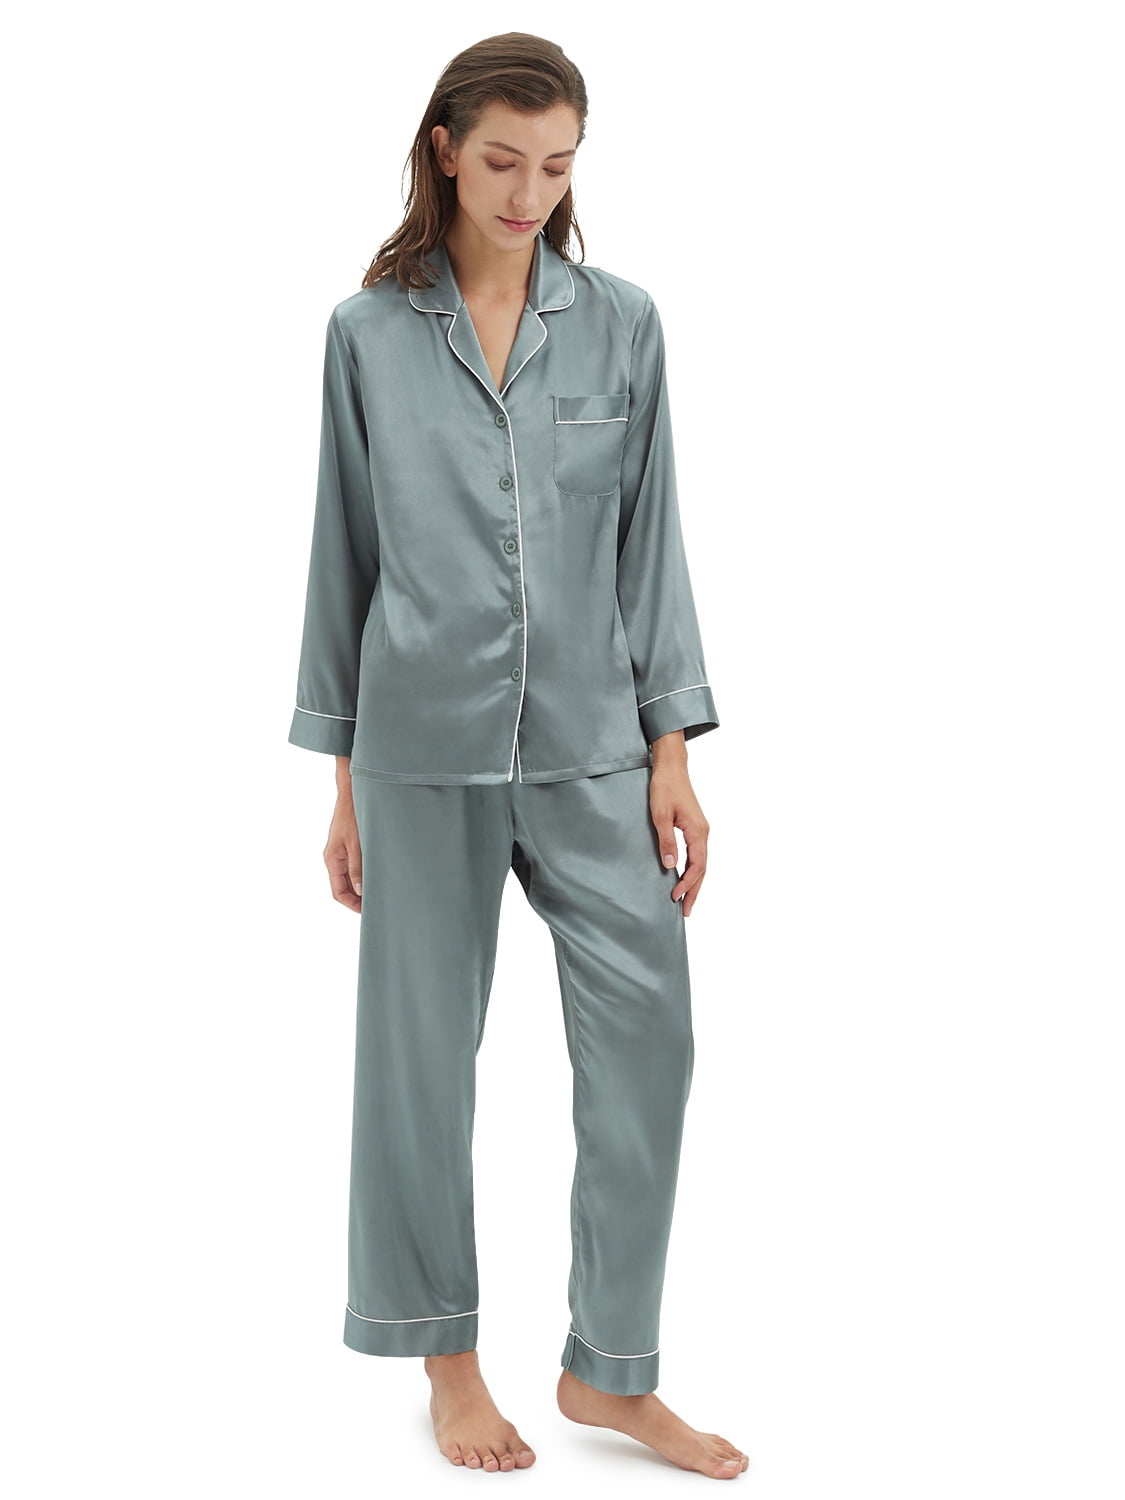 SIORO Mens Silky Satin Pajama Sets-Long Sleeve Pj Set Sleepwear Loungewear Medium-XX-Large